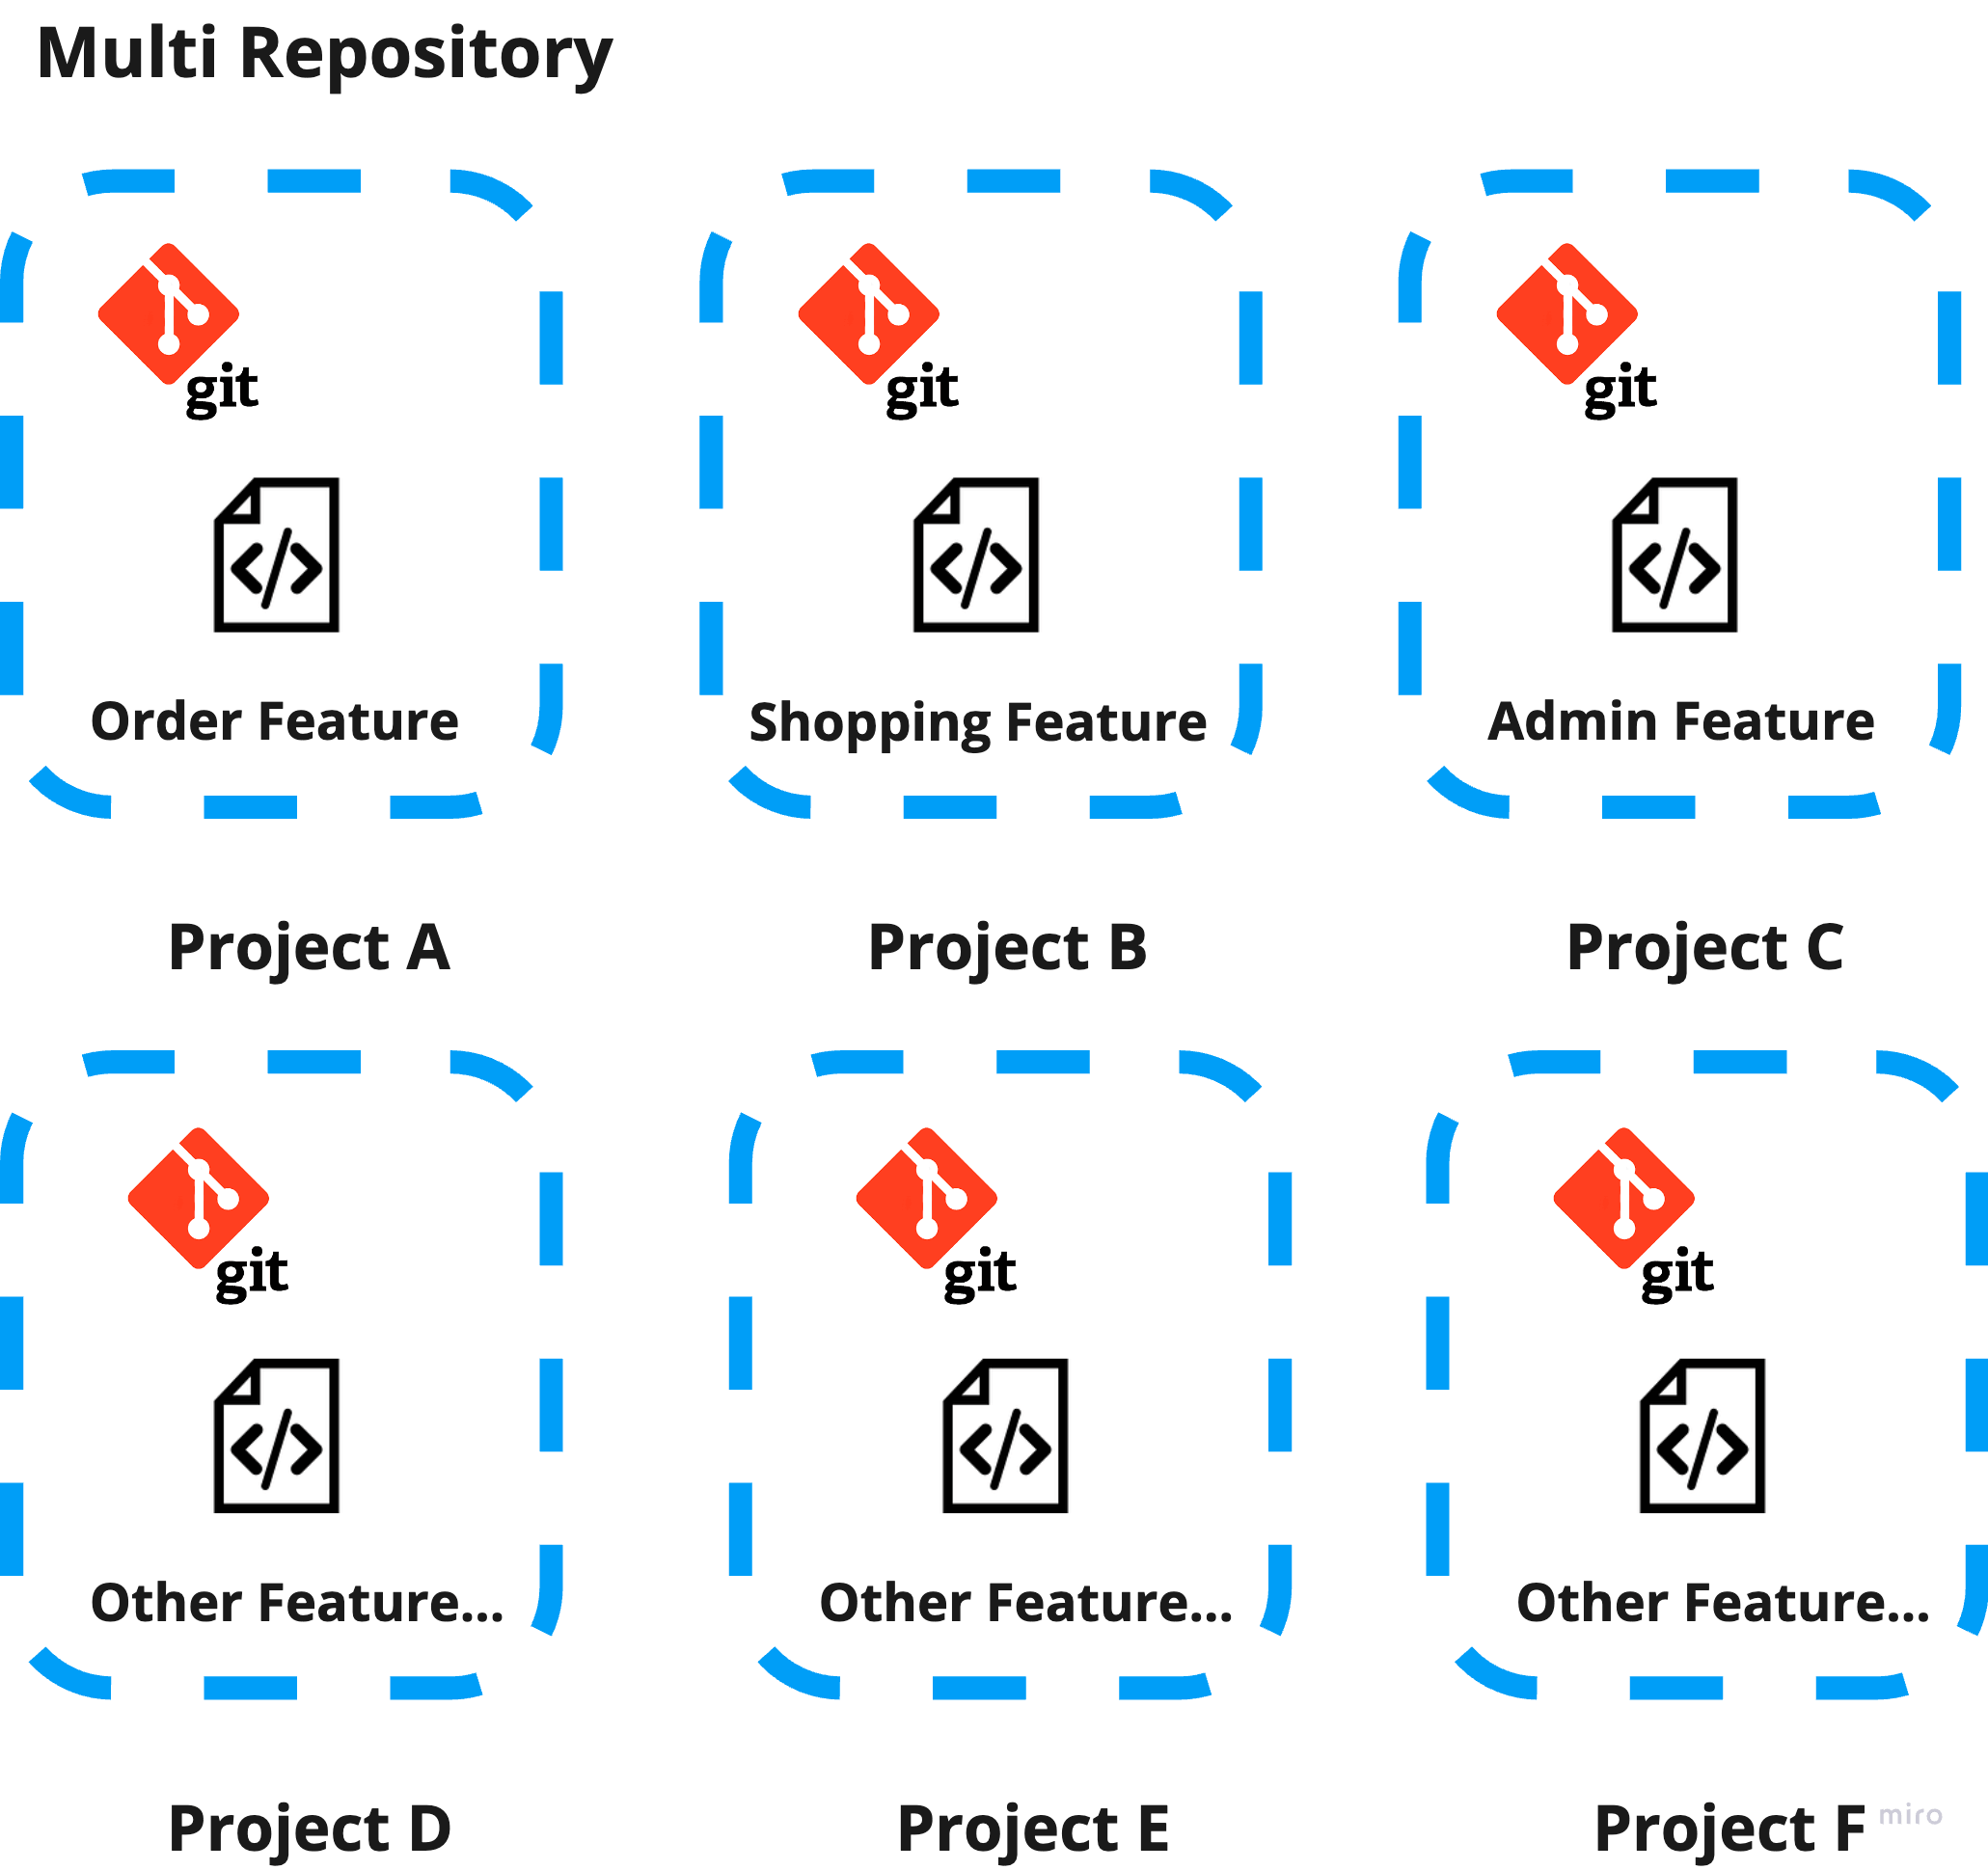 Multi Repository